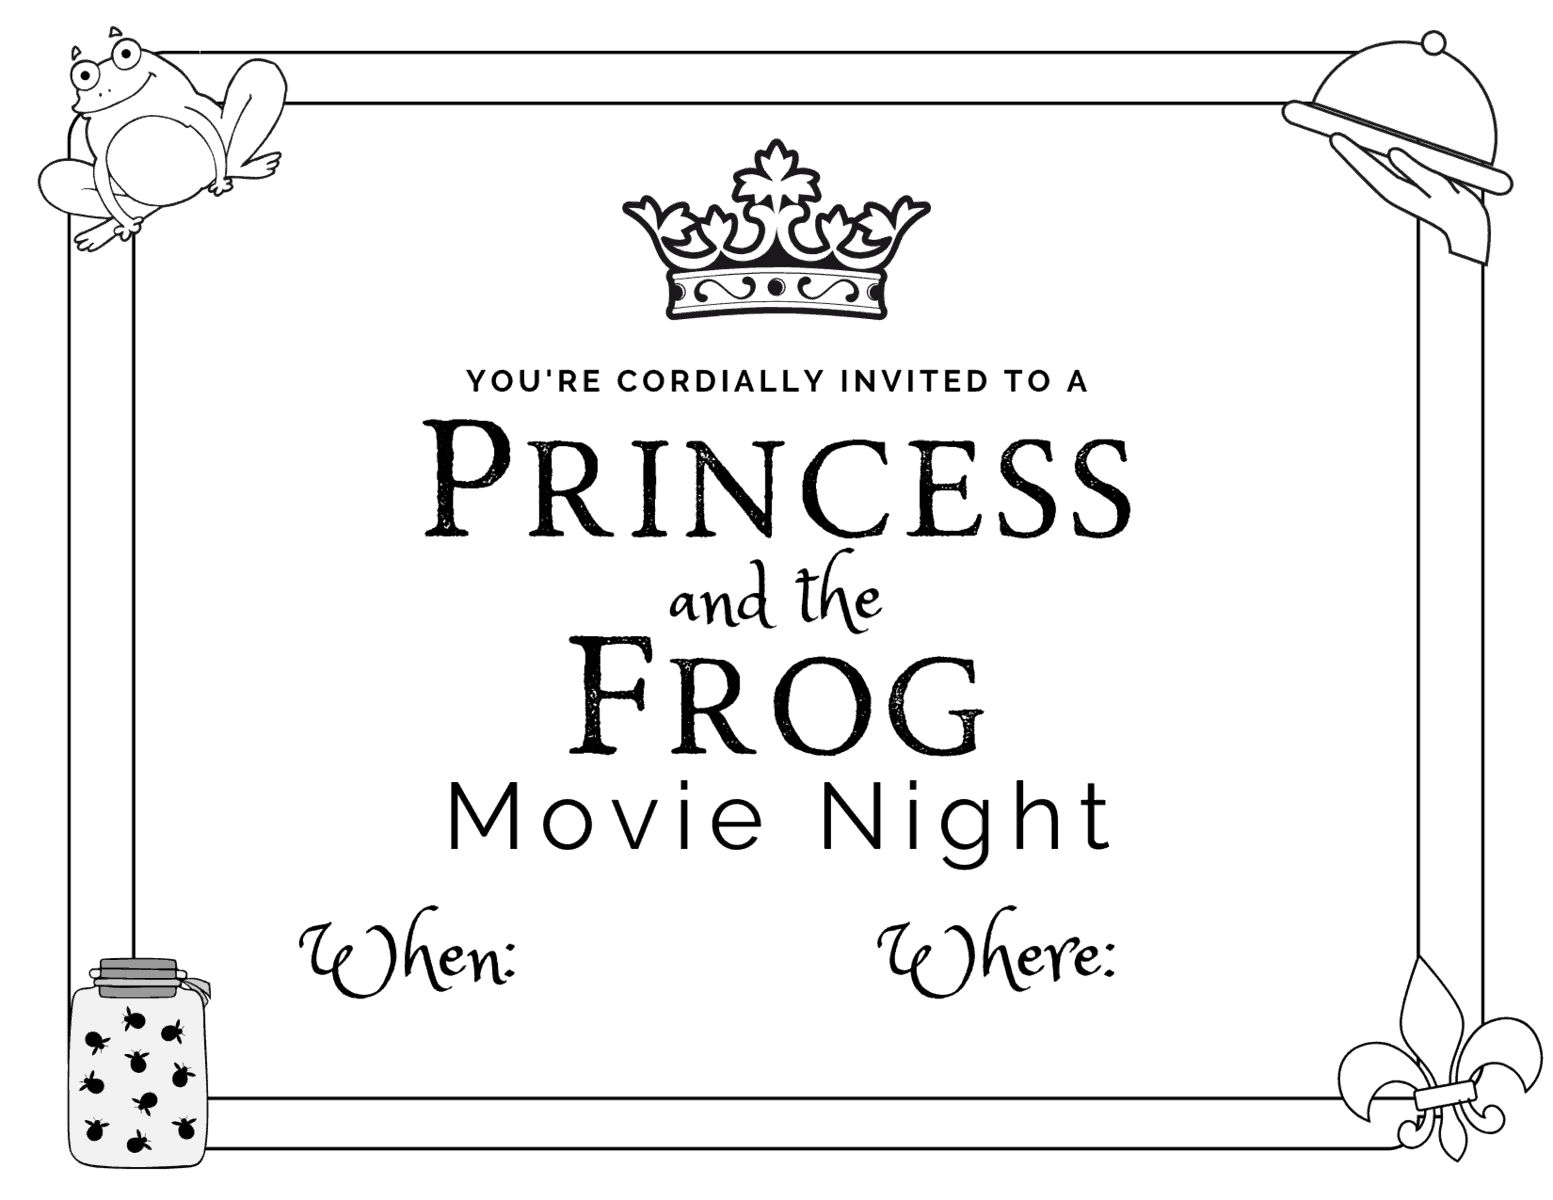 Princess and the Frog Movie Night